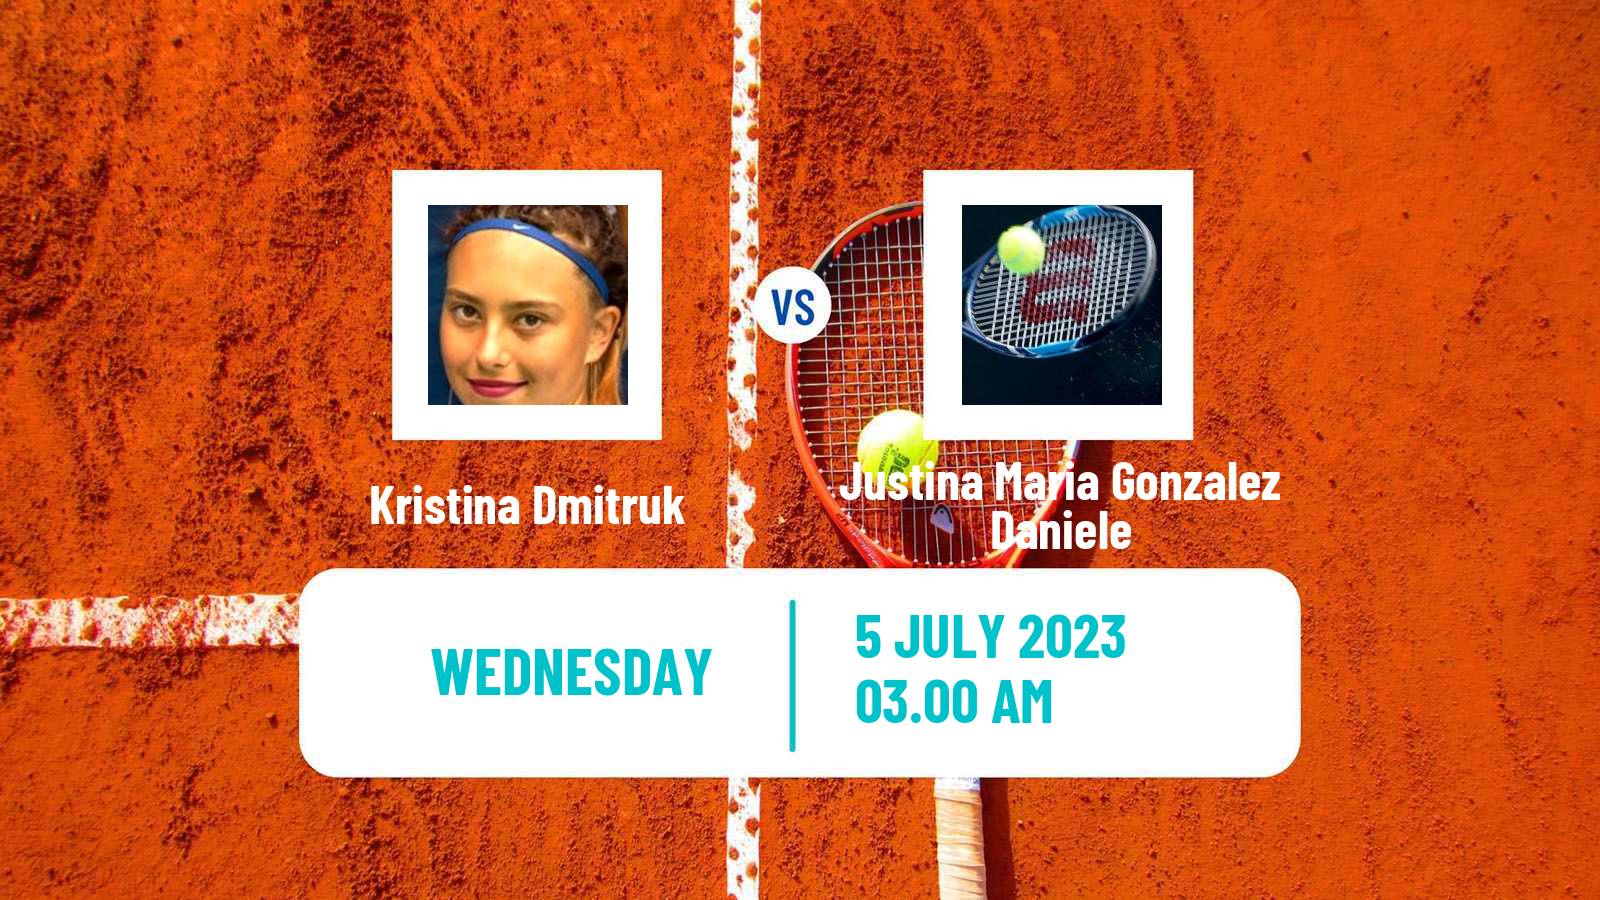 Tennis ITF W25 Klosters Women Kristina Dmitruk - Justina Maria Gonzalez Daniele